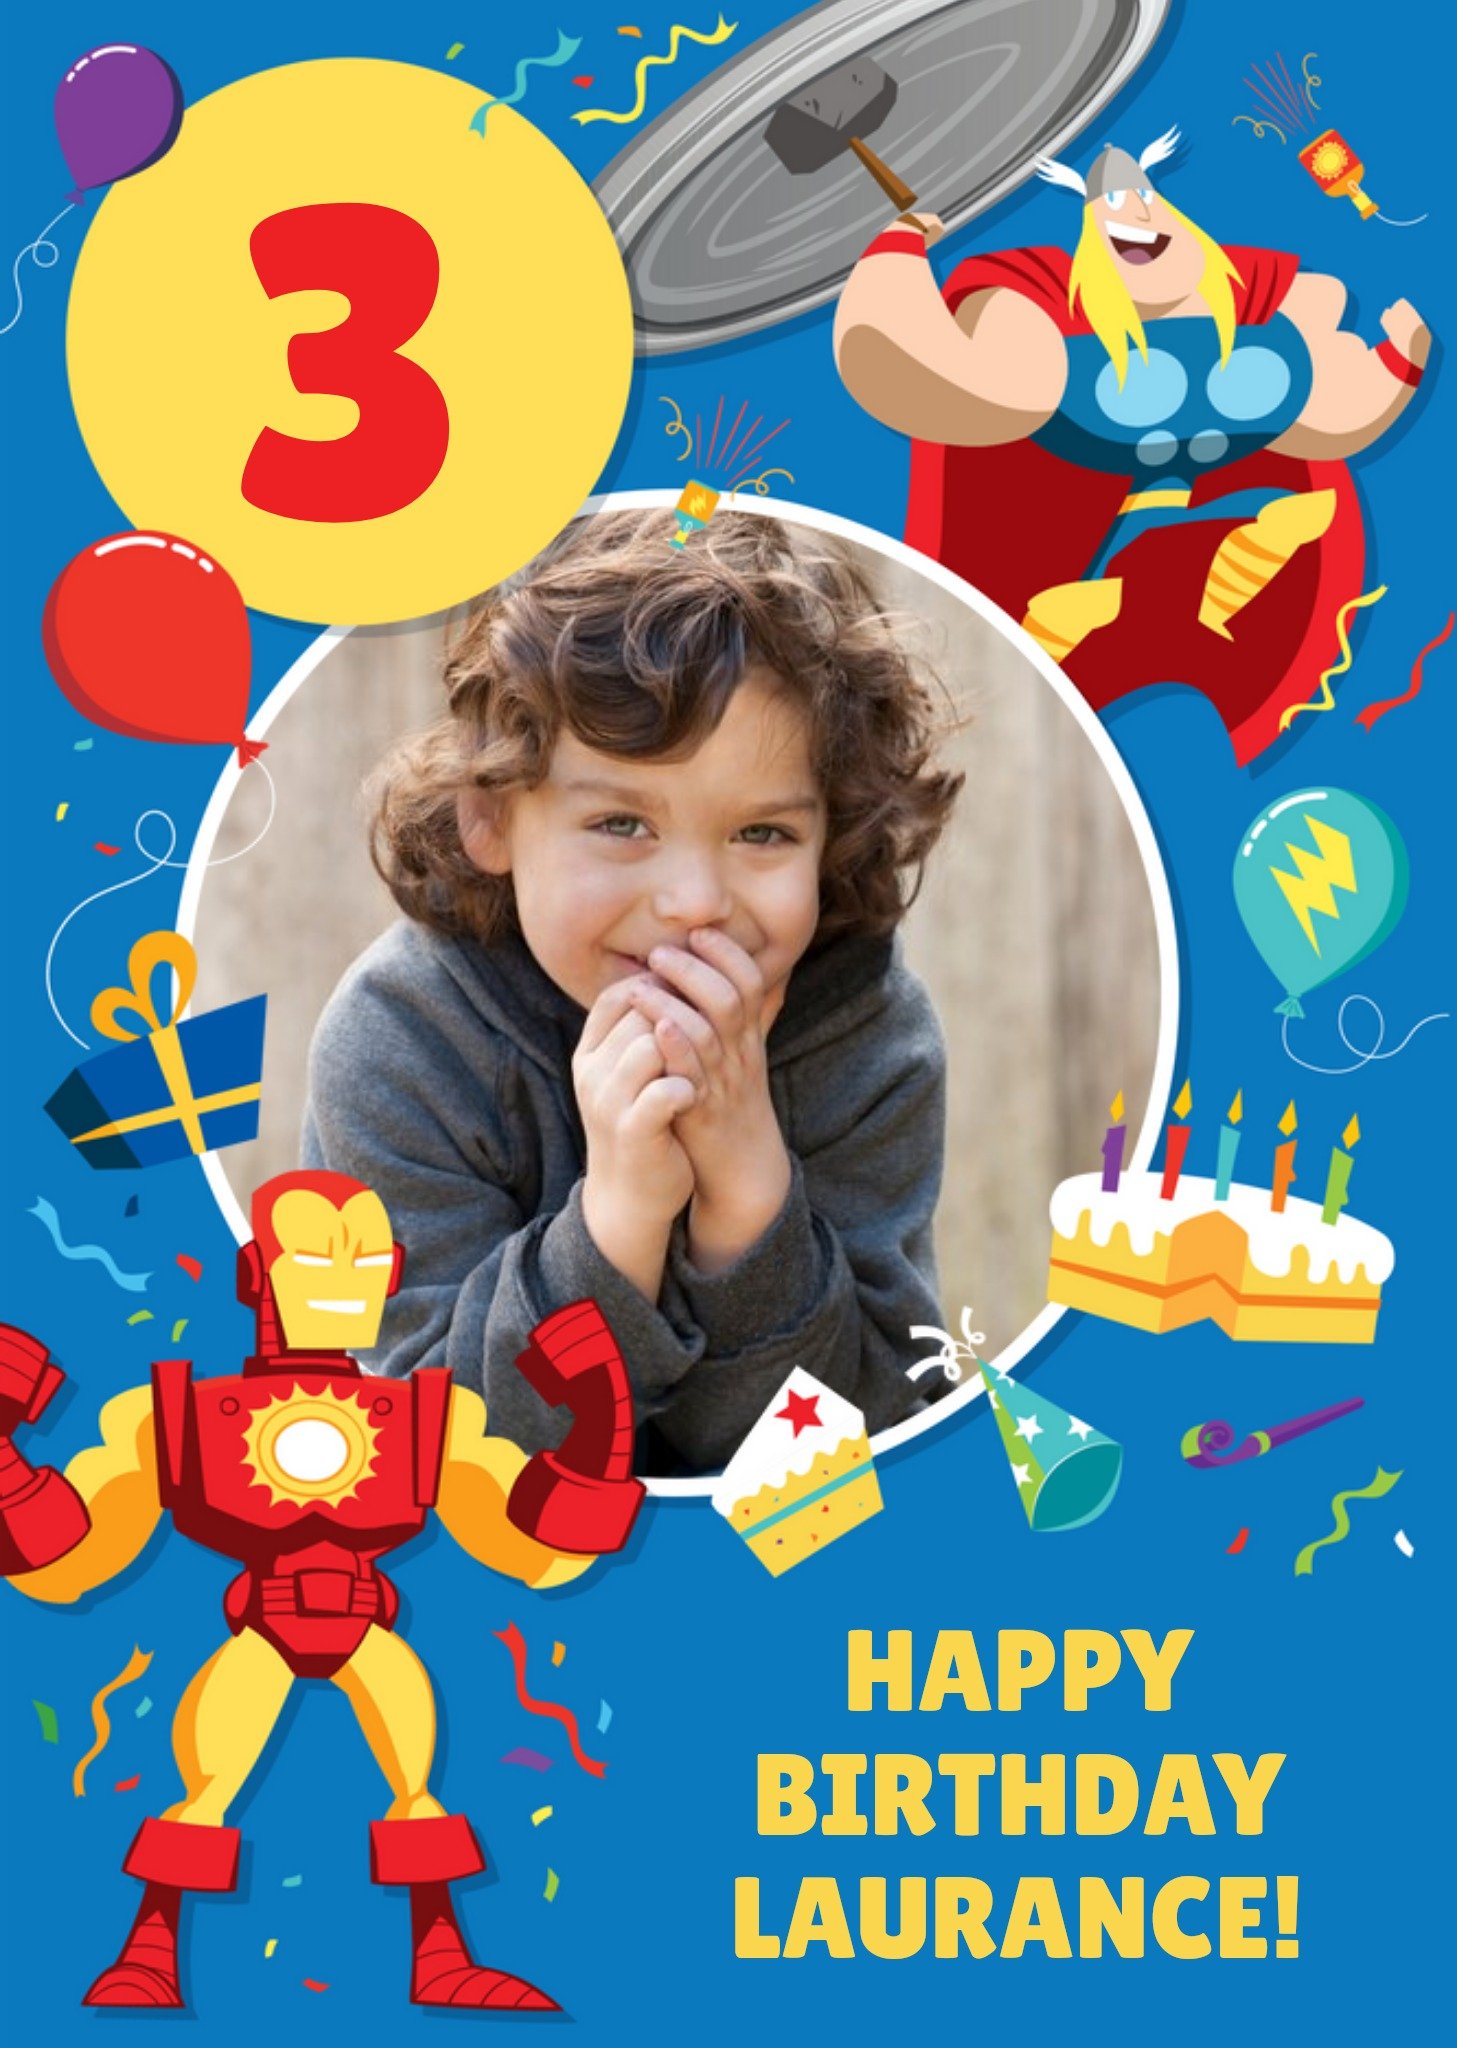 Marvel Comics Happy Birthday Thor And Iron Man Photo Upload Card, Large